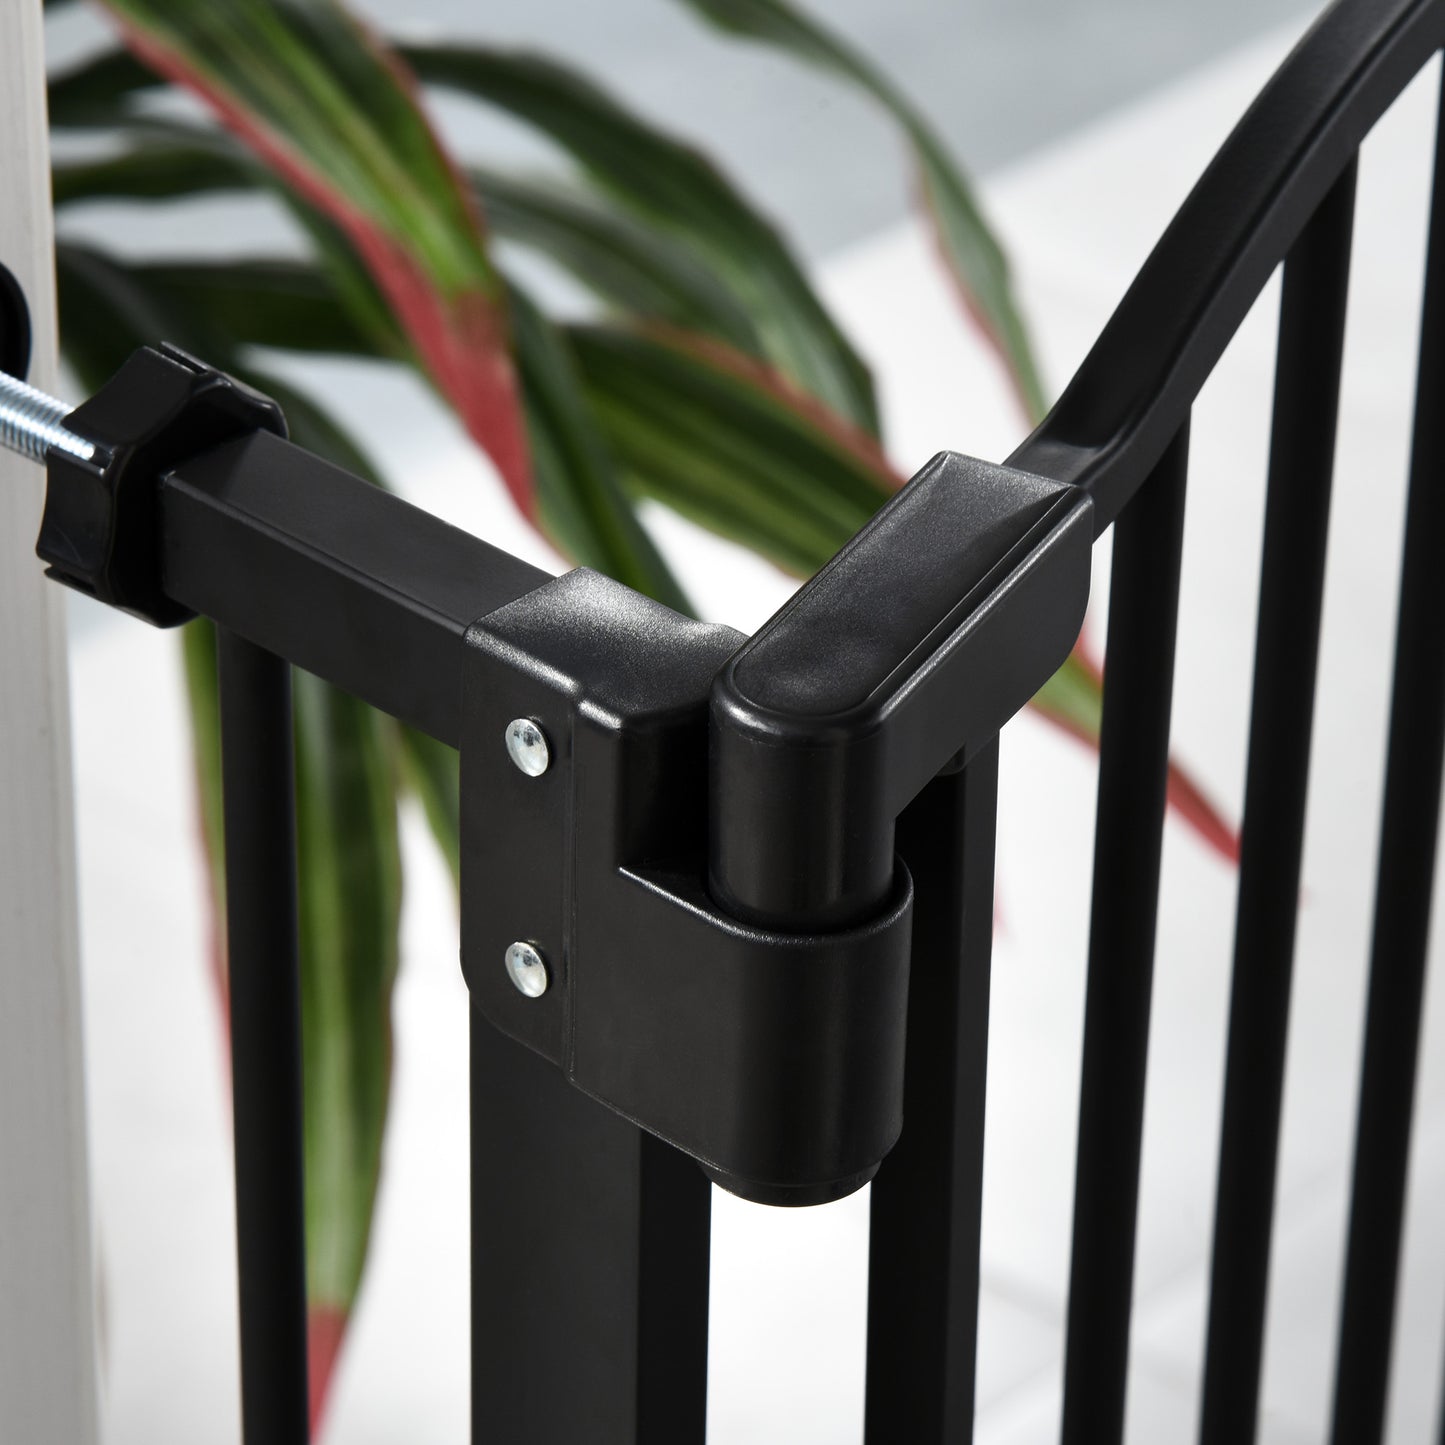 PawHut 74-84cm Adjustable Metal Pet Gate Safety Barrier w/ Auto-Close Door Black